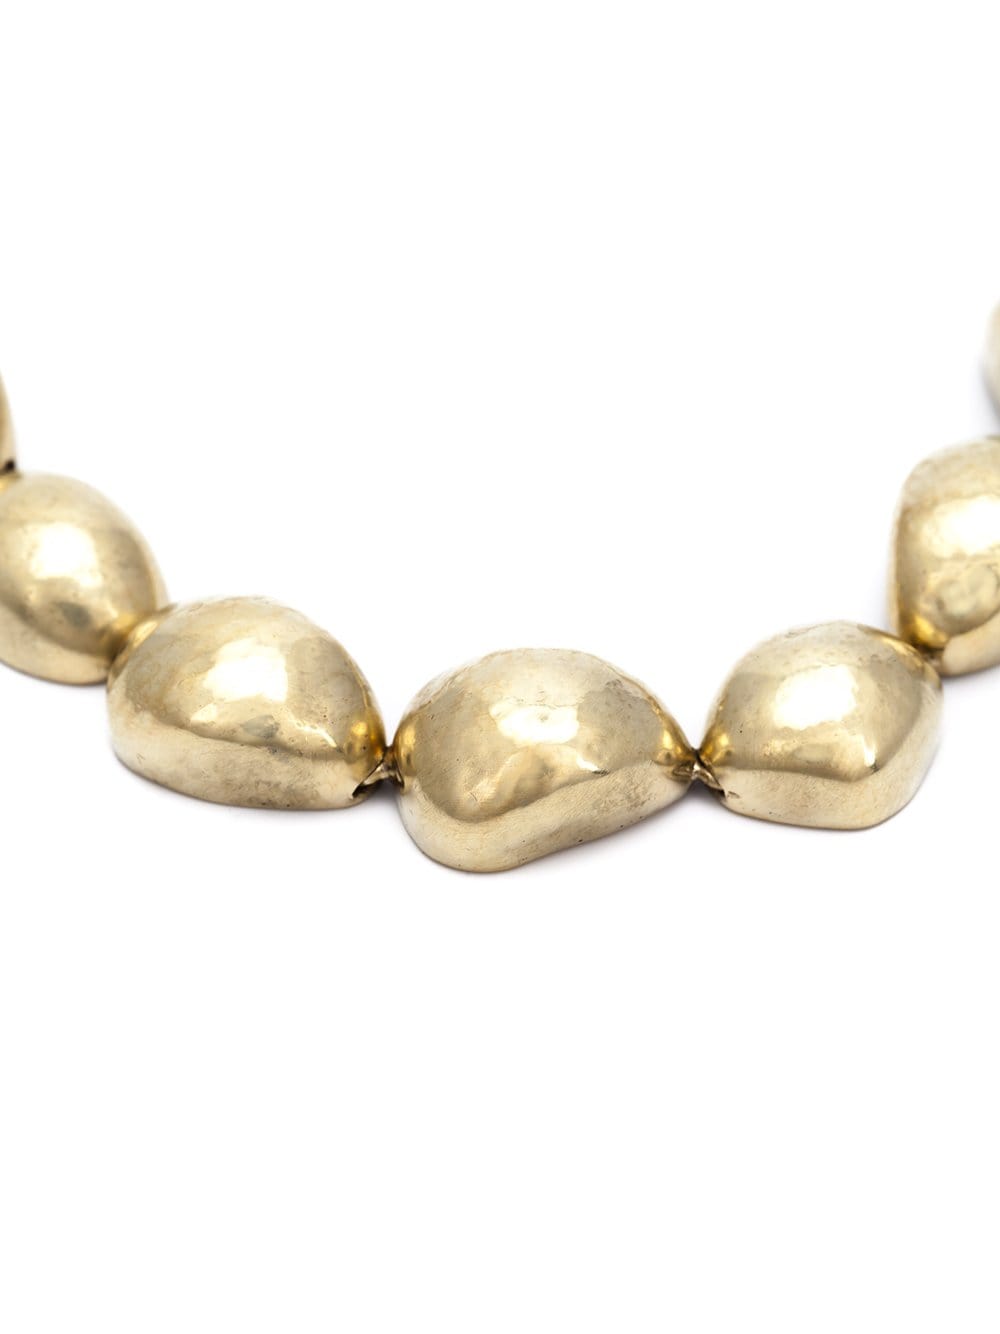 VAUBEL-Small Pebble Necklace-GOLD